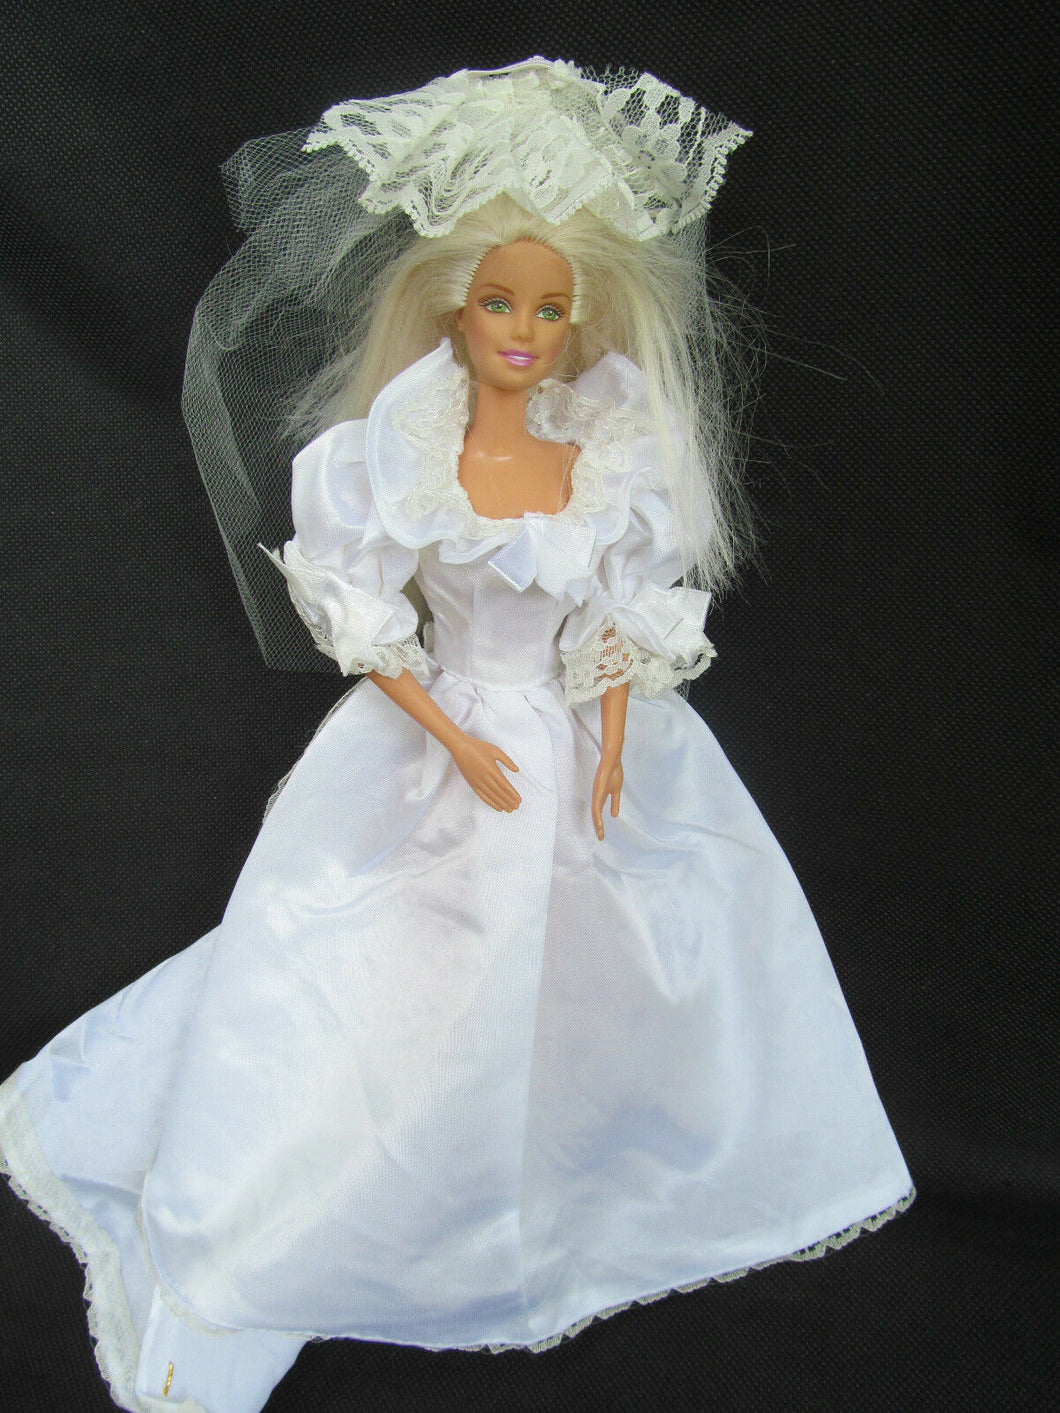 DOLL'S SIZED PRINCESS DIANA REPLICA SLEEVED WHITE WEDDING DRESS, VEIL & TRAIN